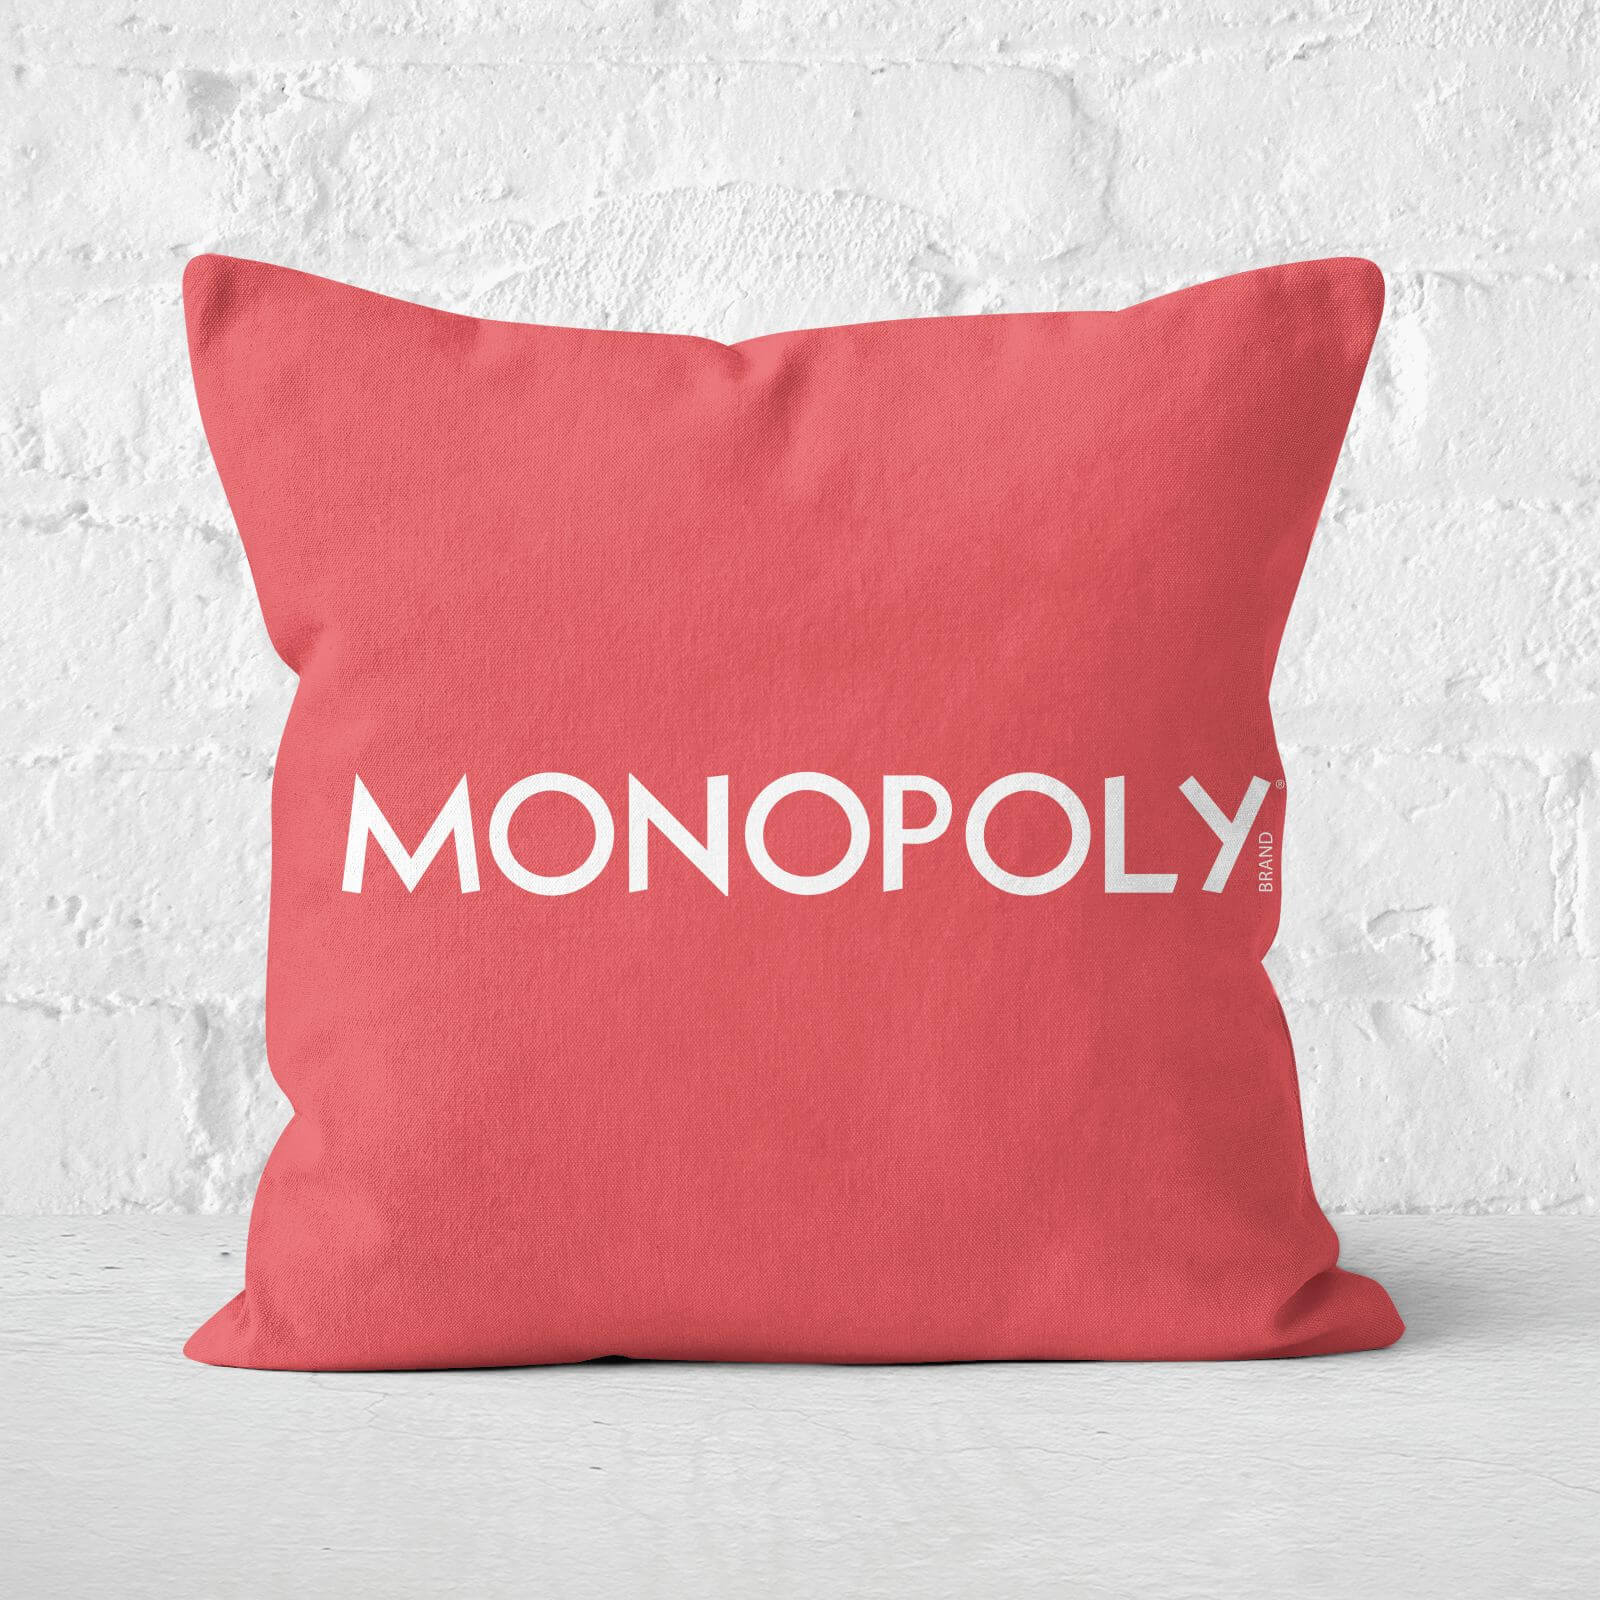 Monopoly Pattern Square Cushion - 60x60cm - Eco Friendly von Decorsome